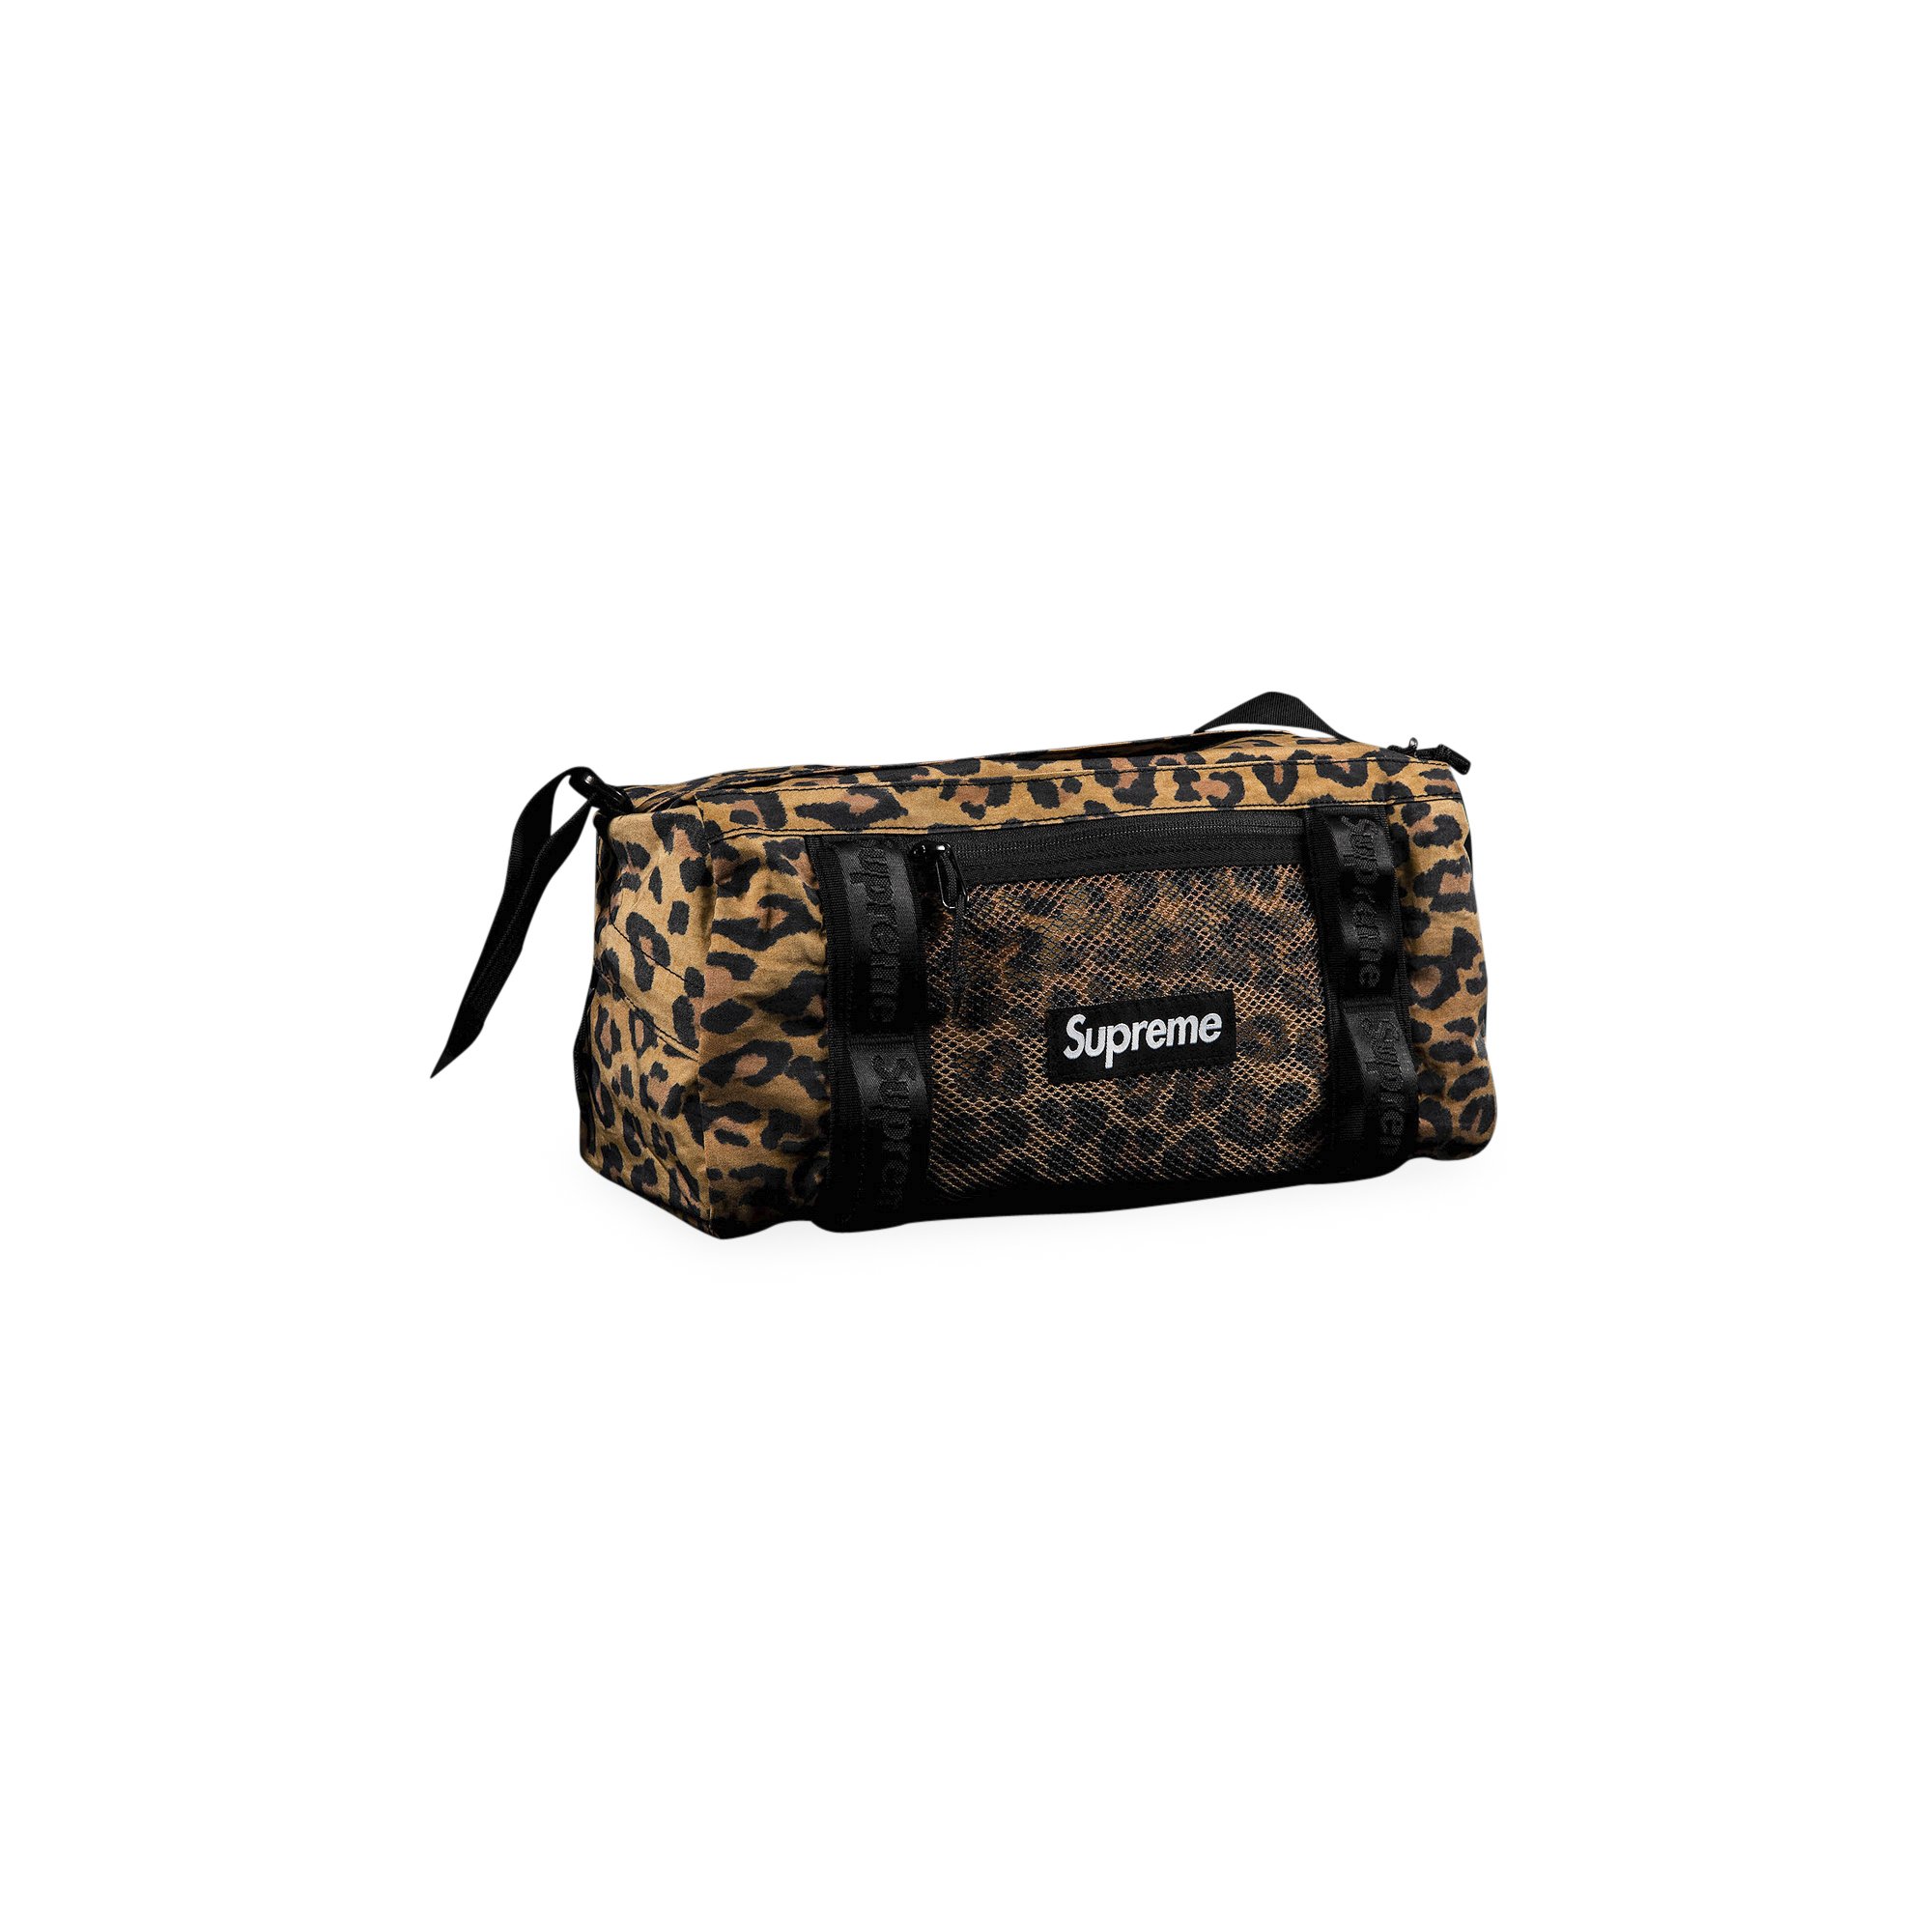 Buy Supreme Mini Duffle Bag 'Leopard' - FW20B9 LEOPARD | GOAT